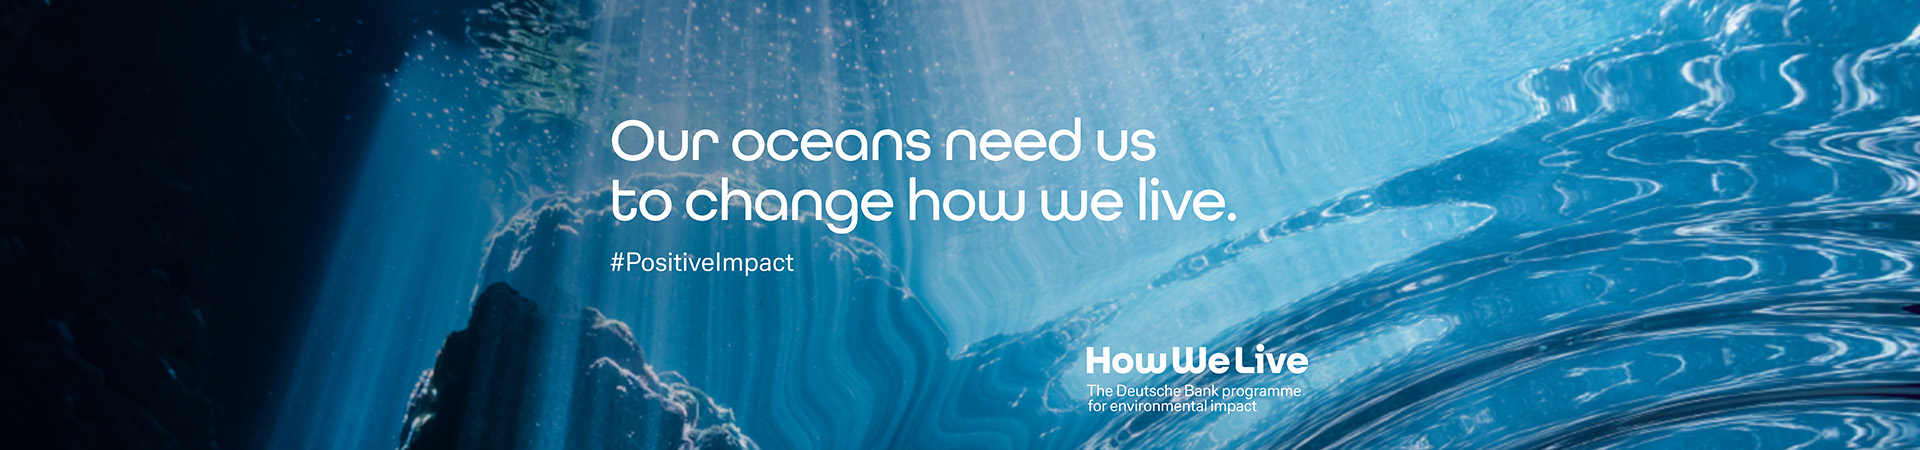 How-we-live-oceans.jpg